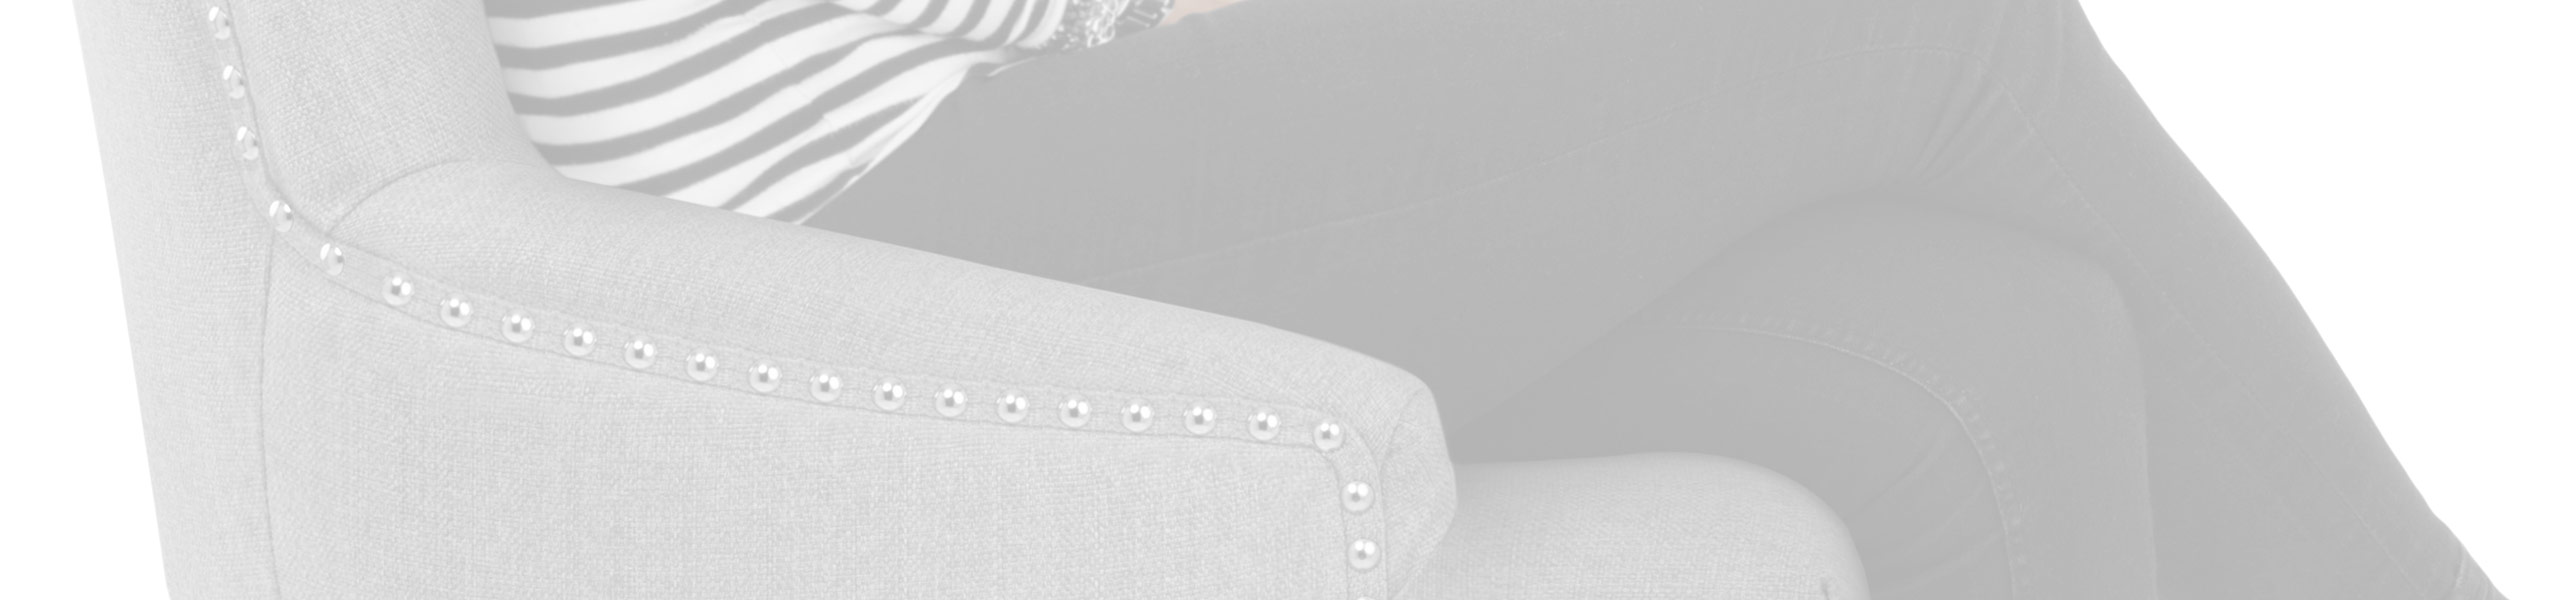 Knightsbridge Oak Chair Grey Fabric Review Banner